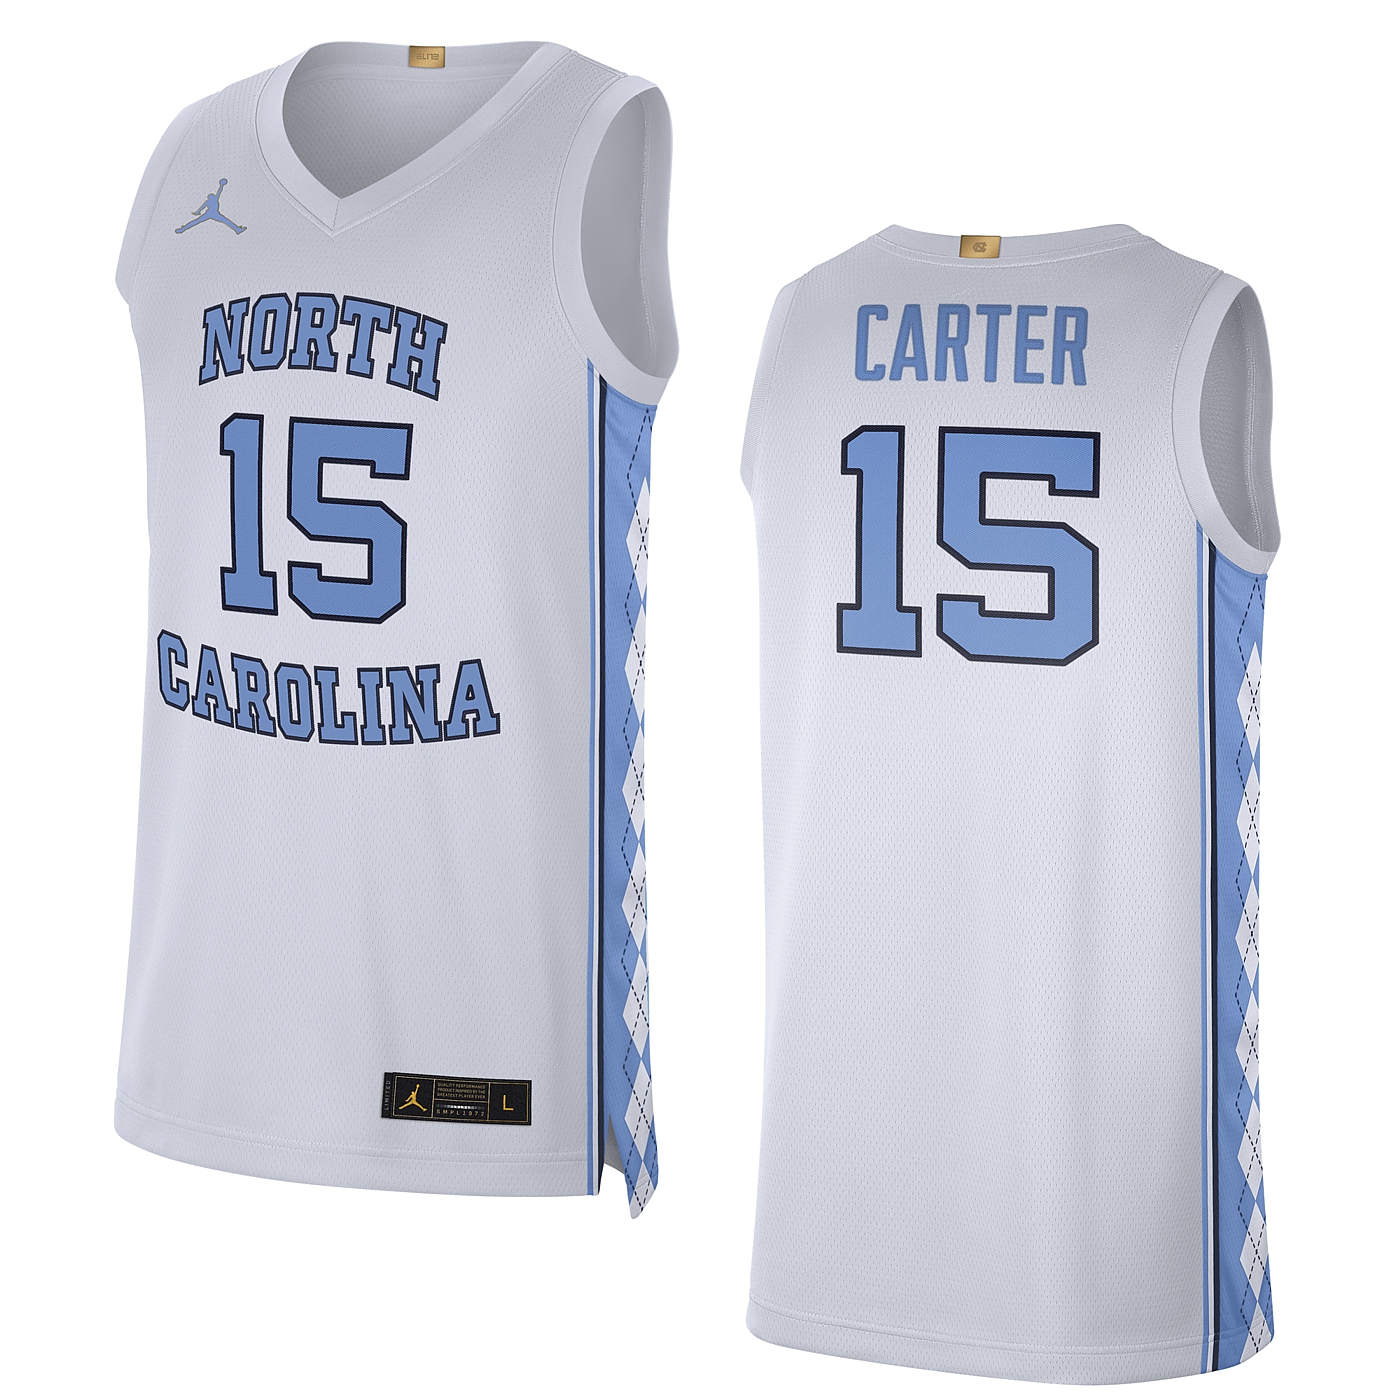 Nike North Carolina Vince Carter jersey XL